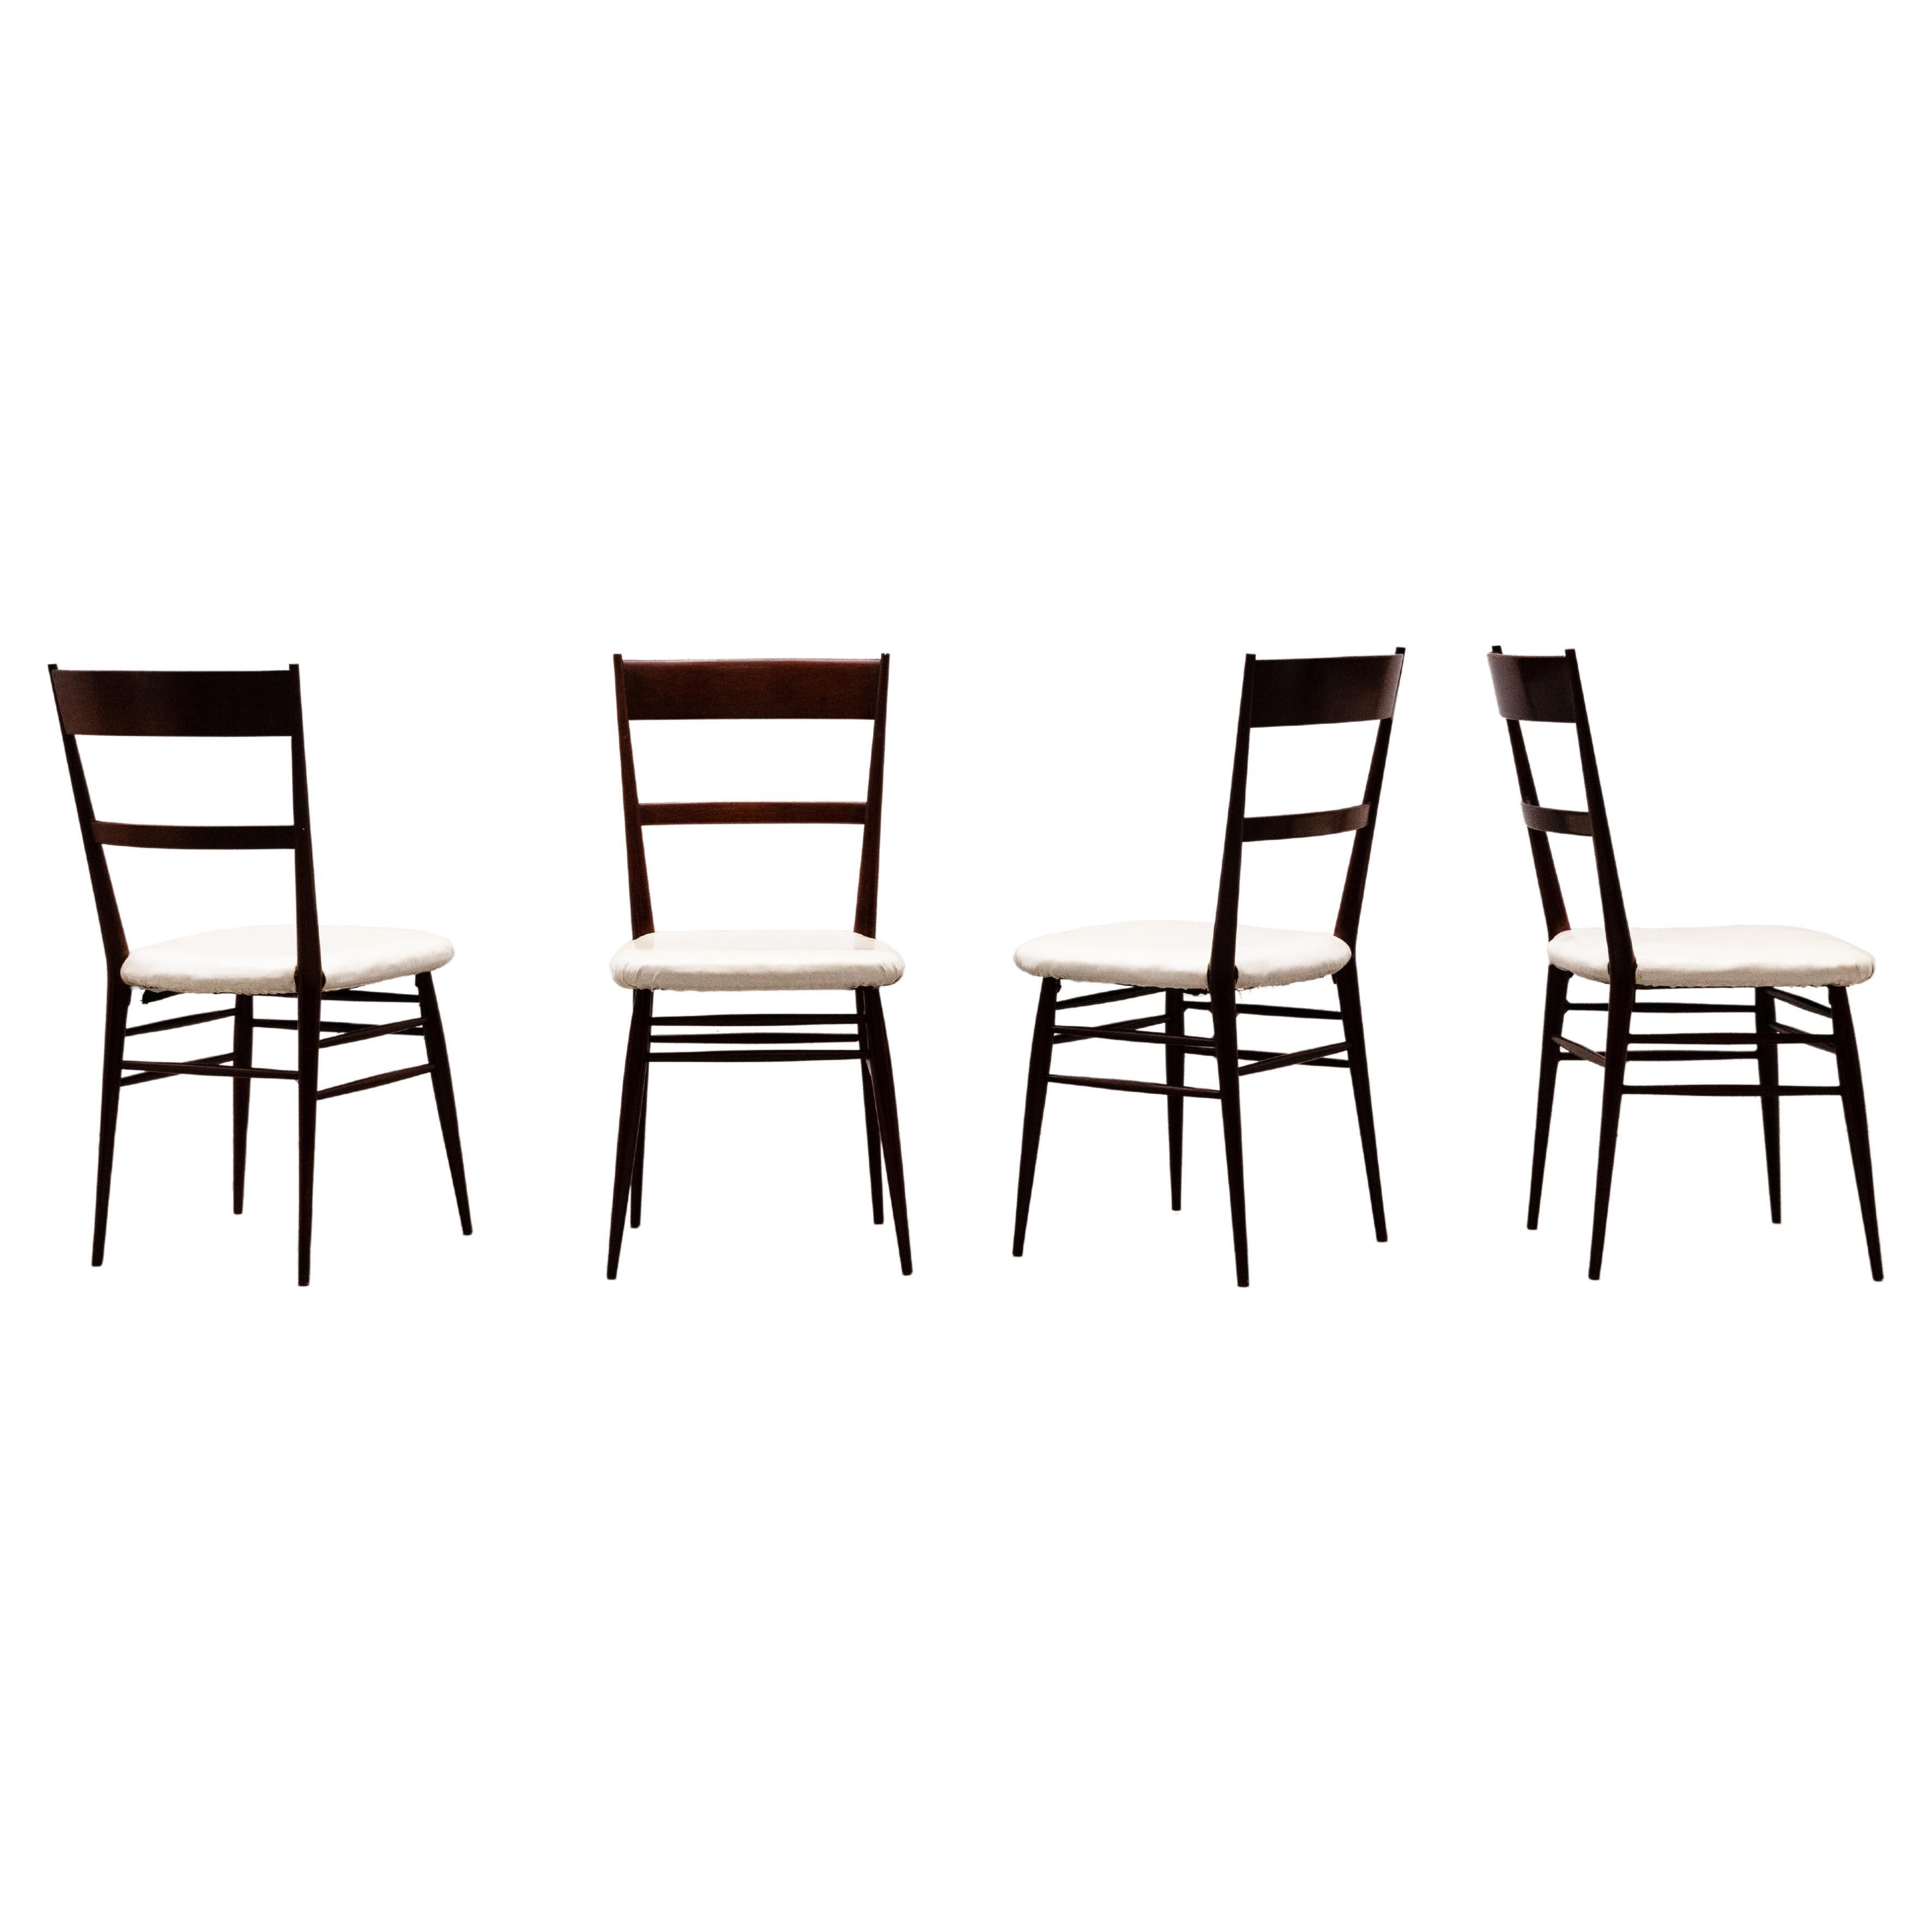 Set of four "First Chairs" by Joaquim Tenreiro, 1942.